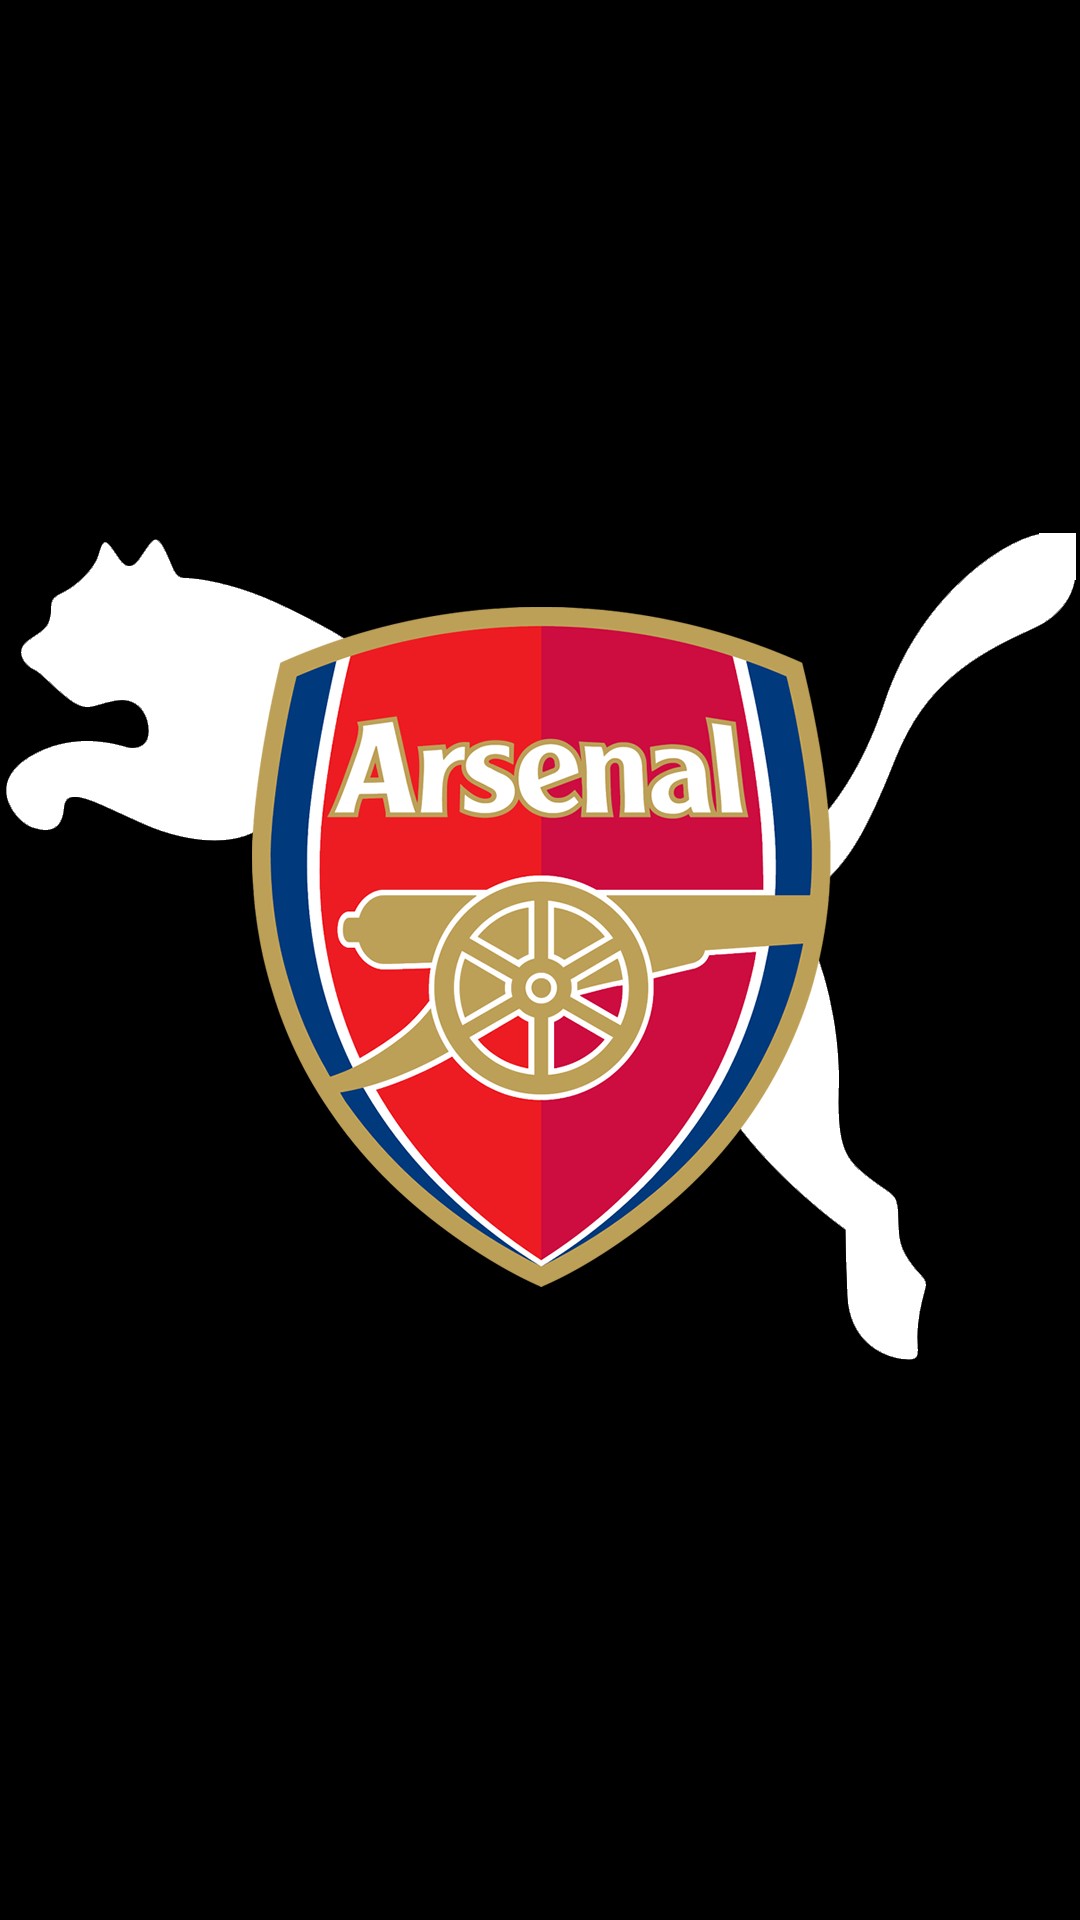 Arsenal Puma iPhone Wallpaper resolution 1080x1920